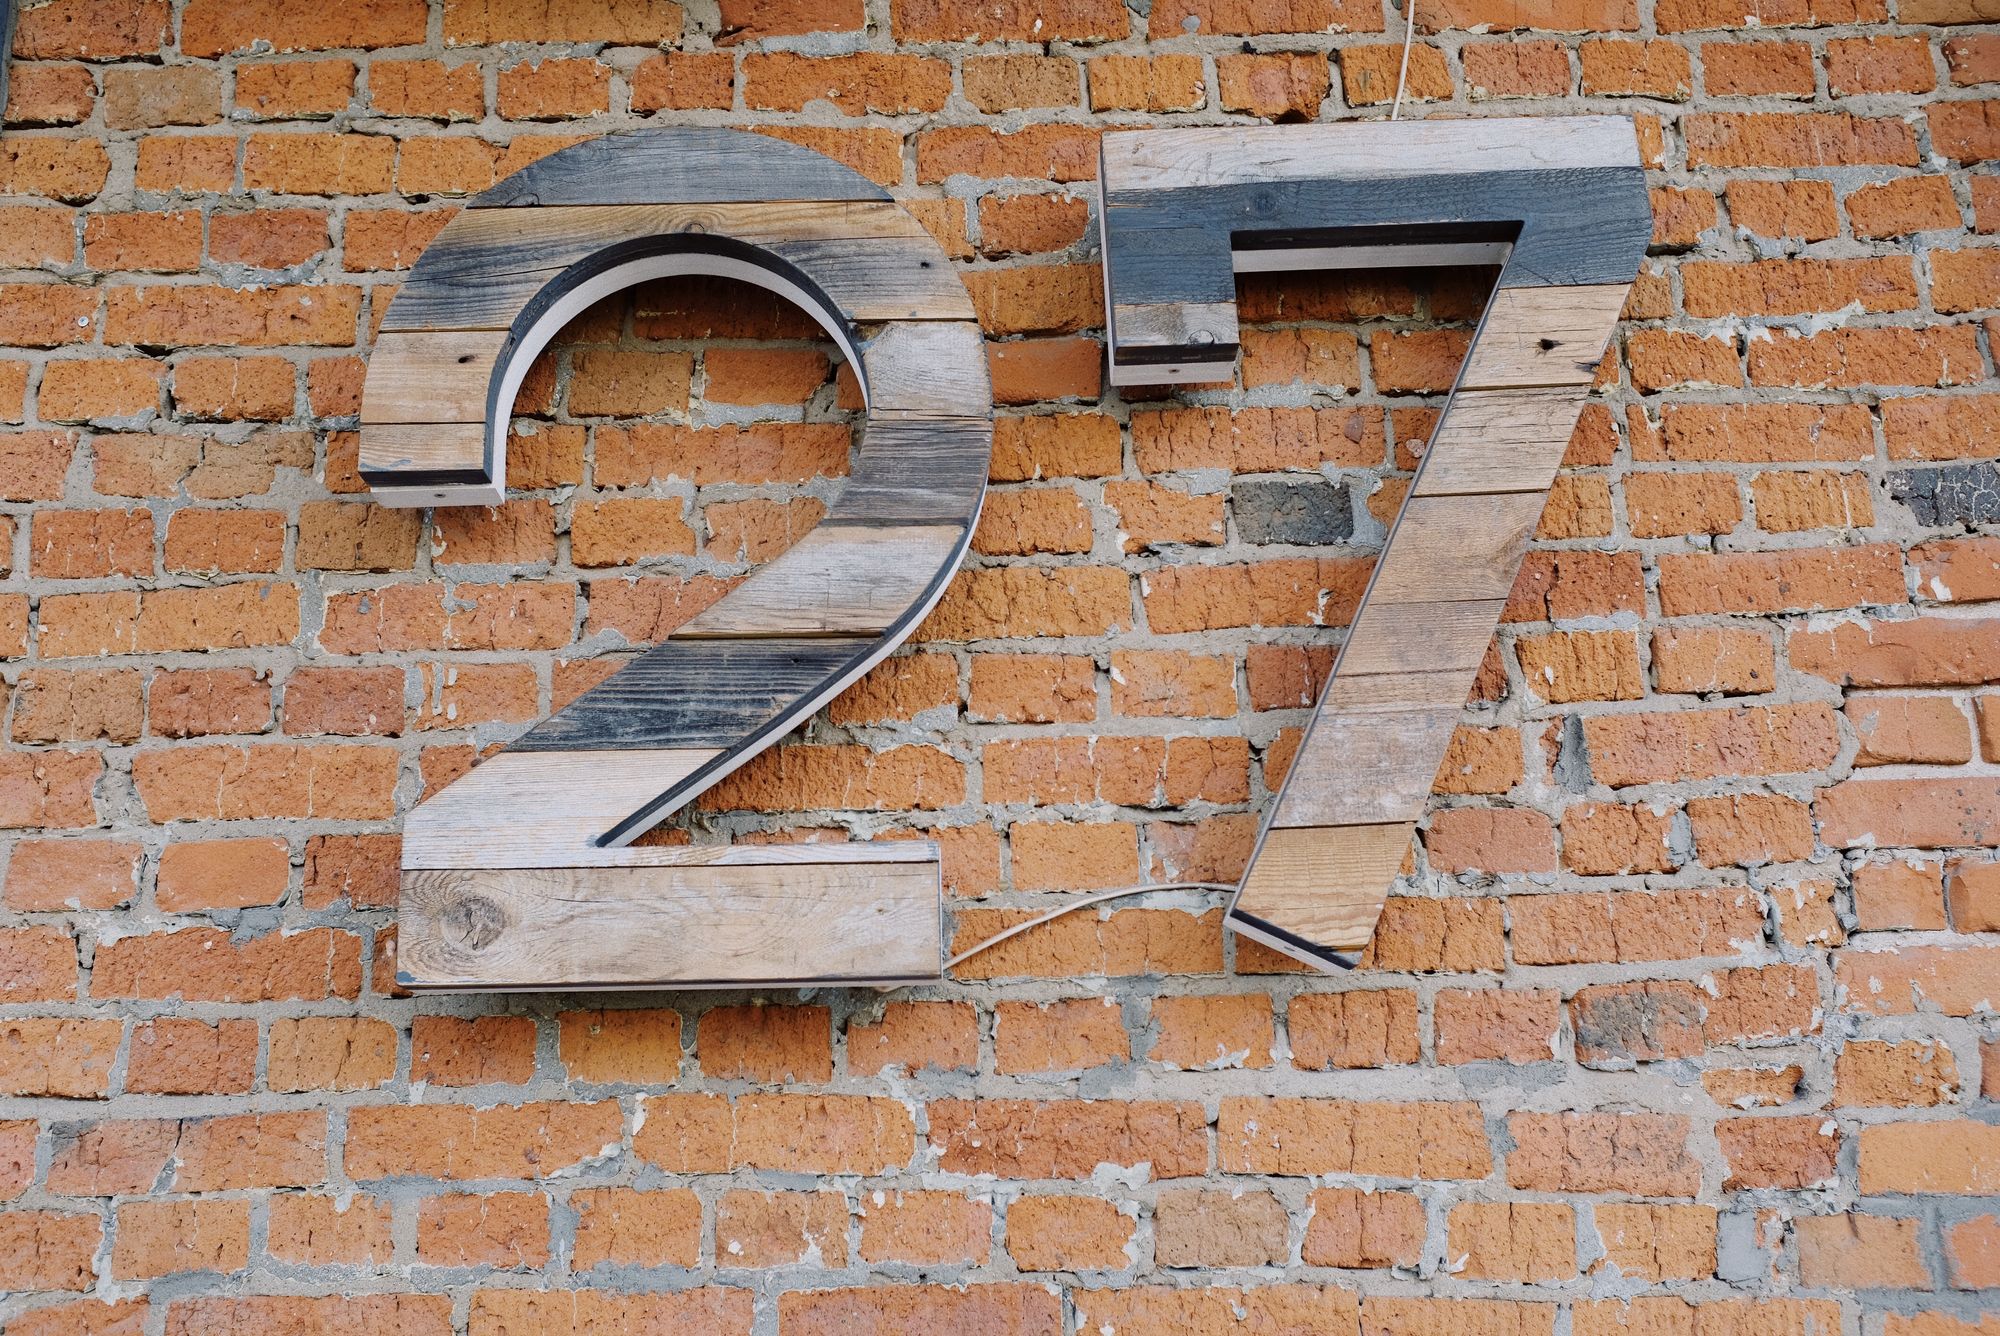 "27" on a brick wall